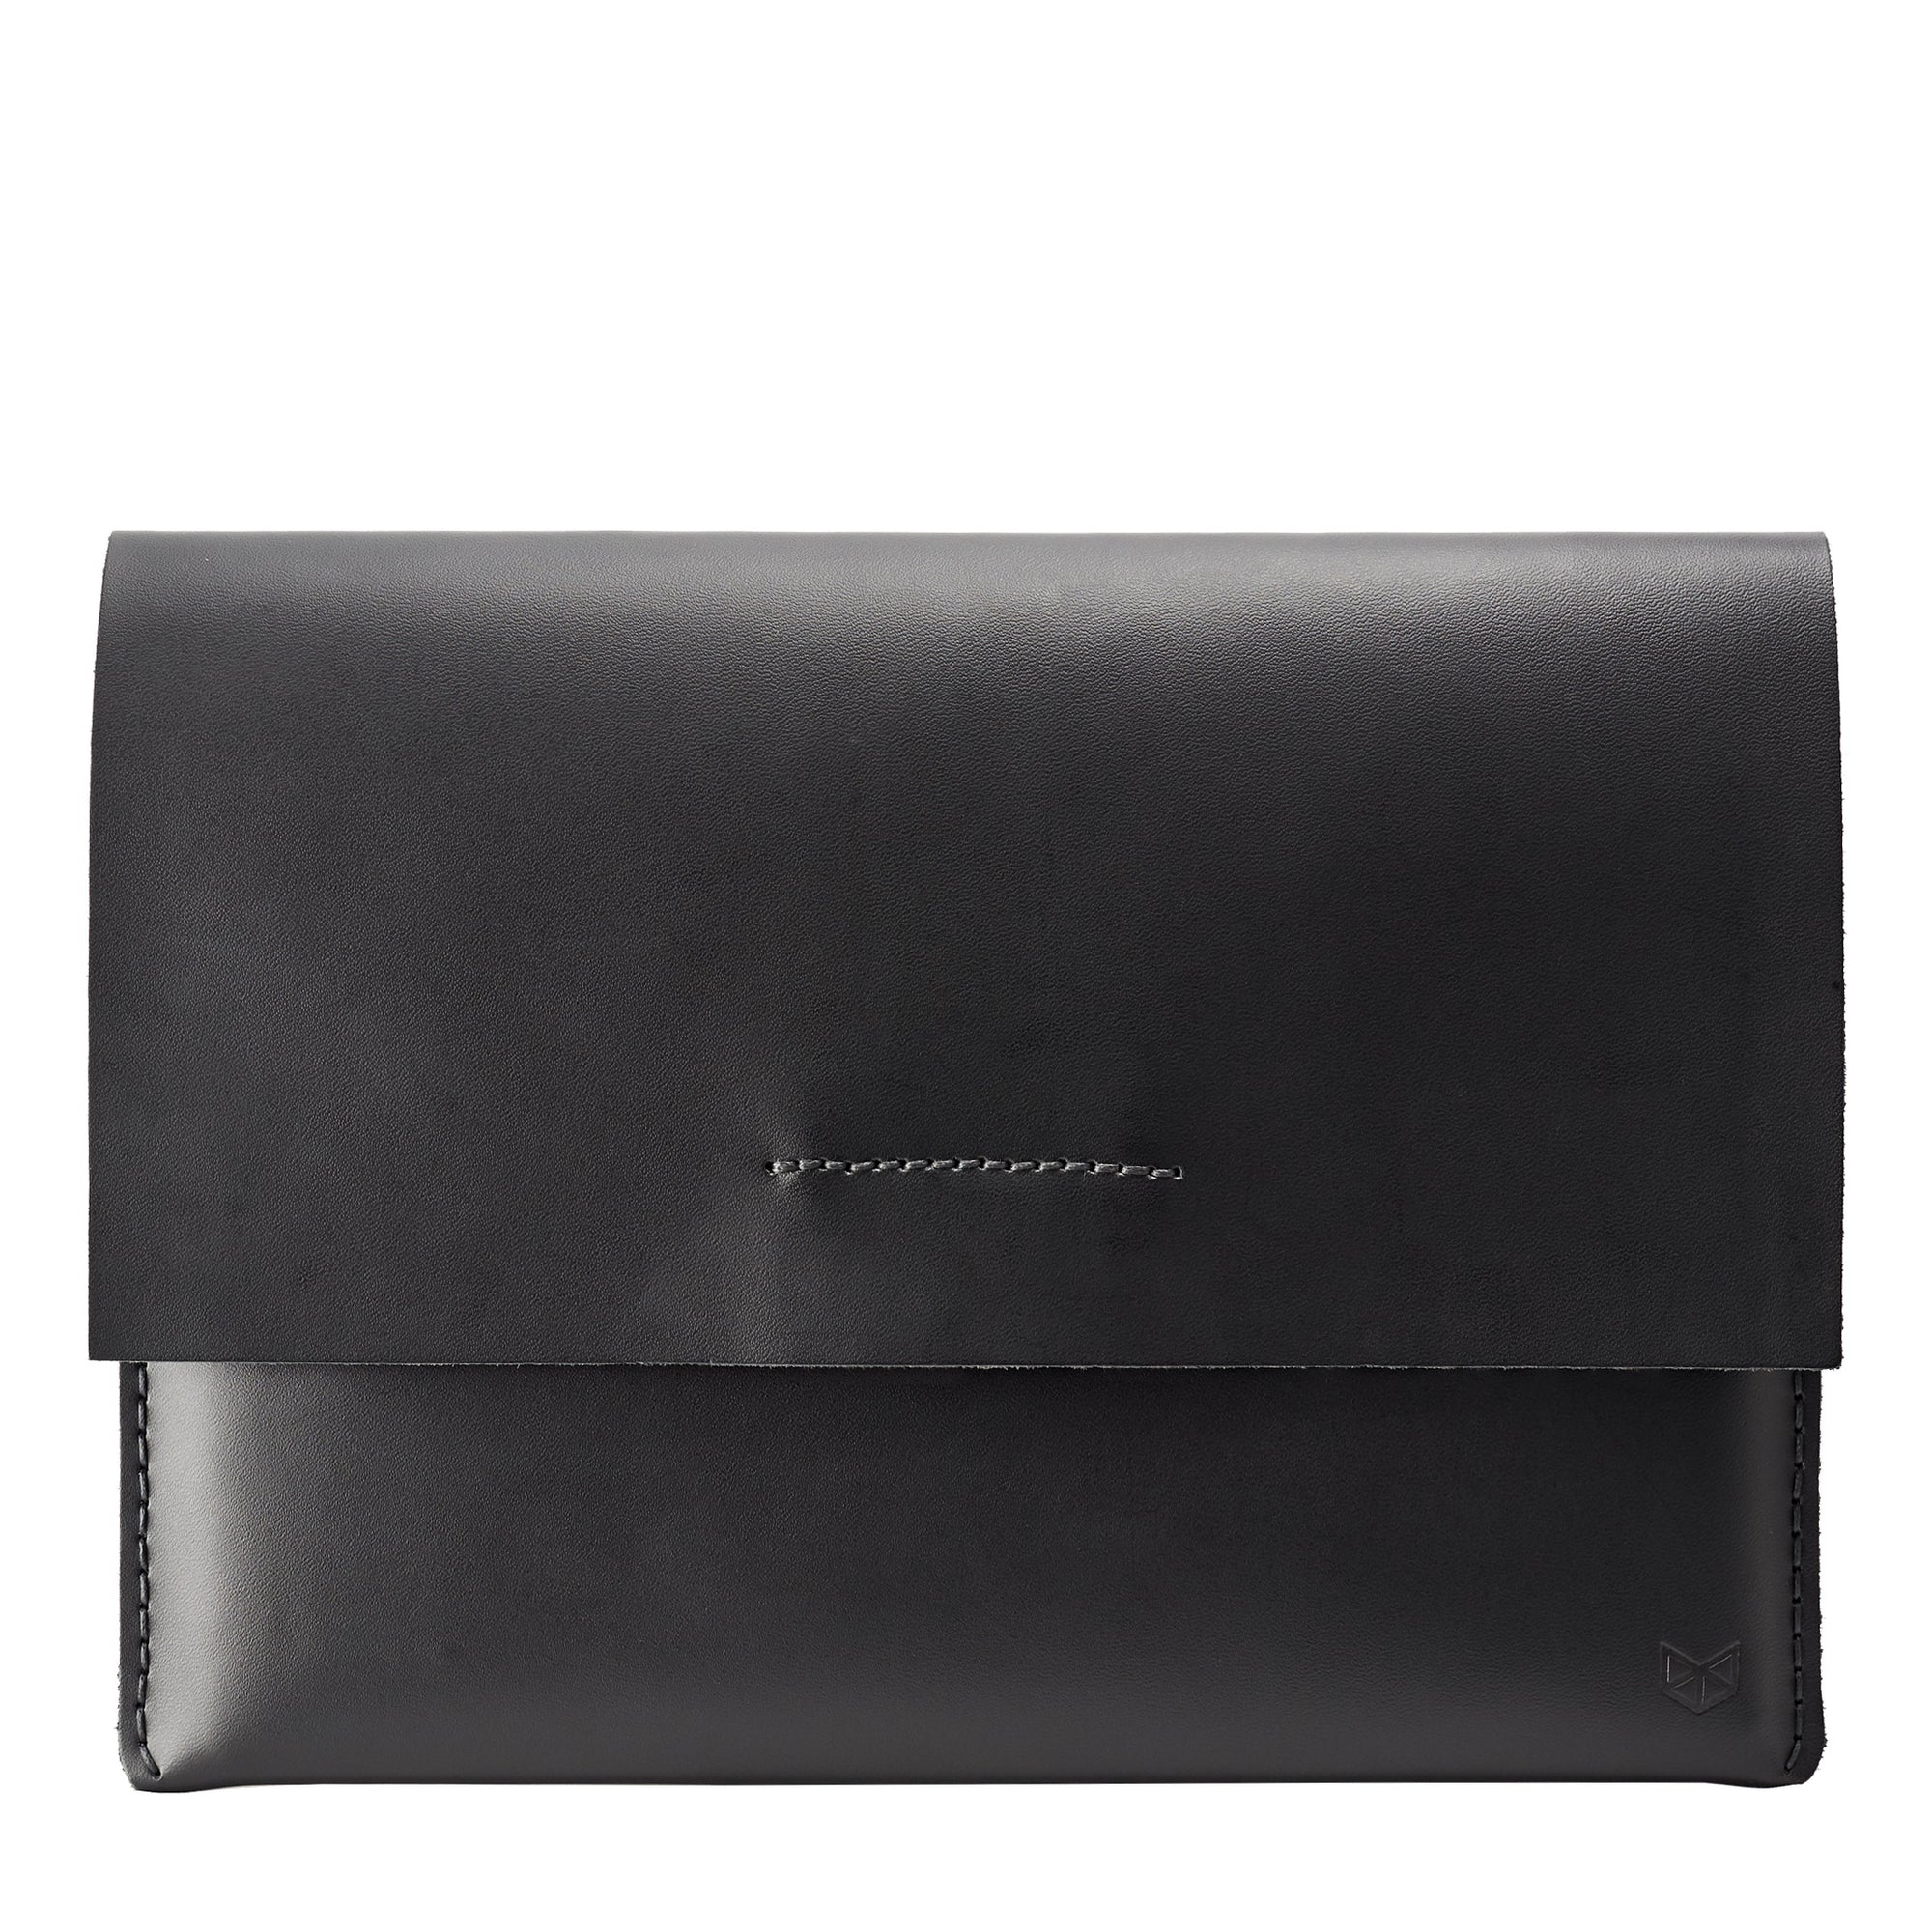 Cover. Google Pixelbook Black leather case with pen holder. Pixelbook laptop mens folio